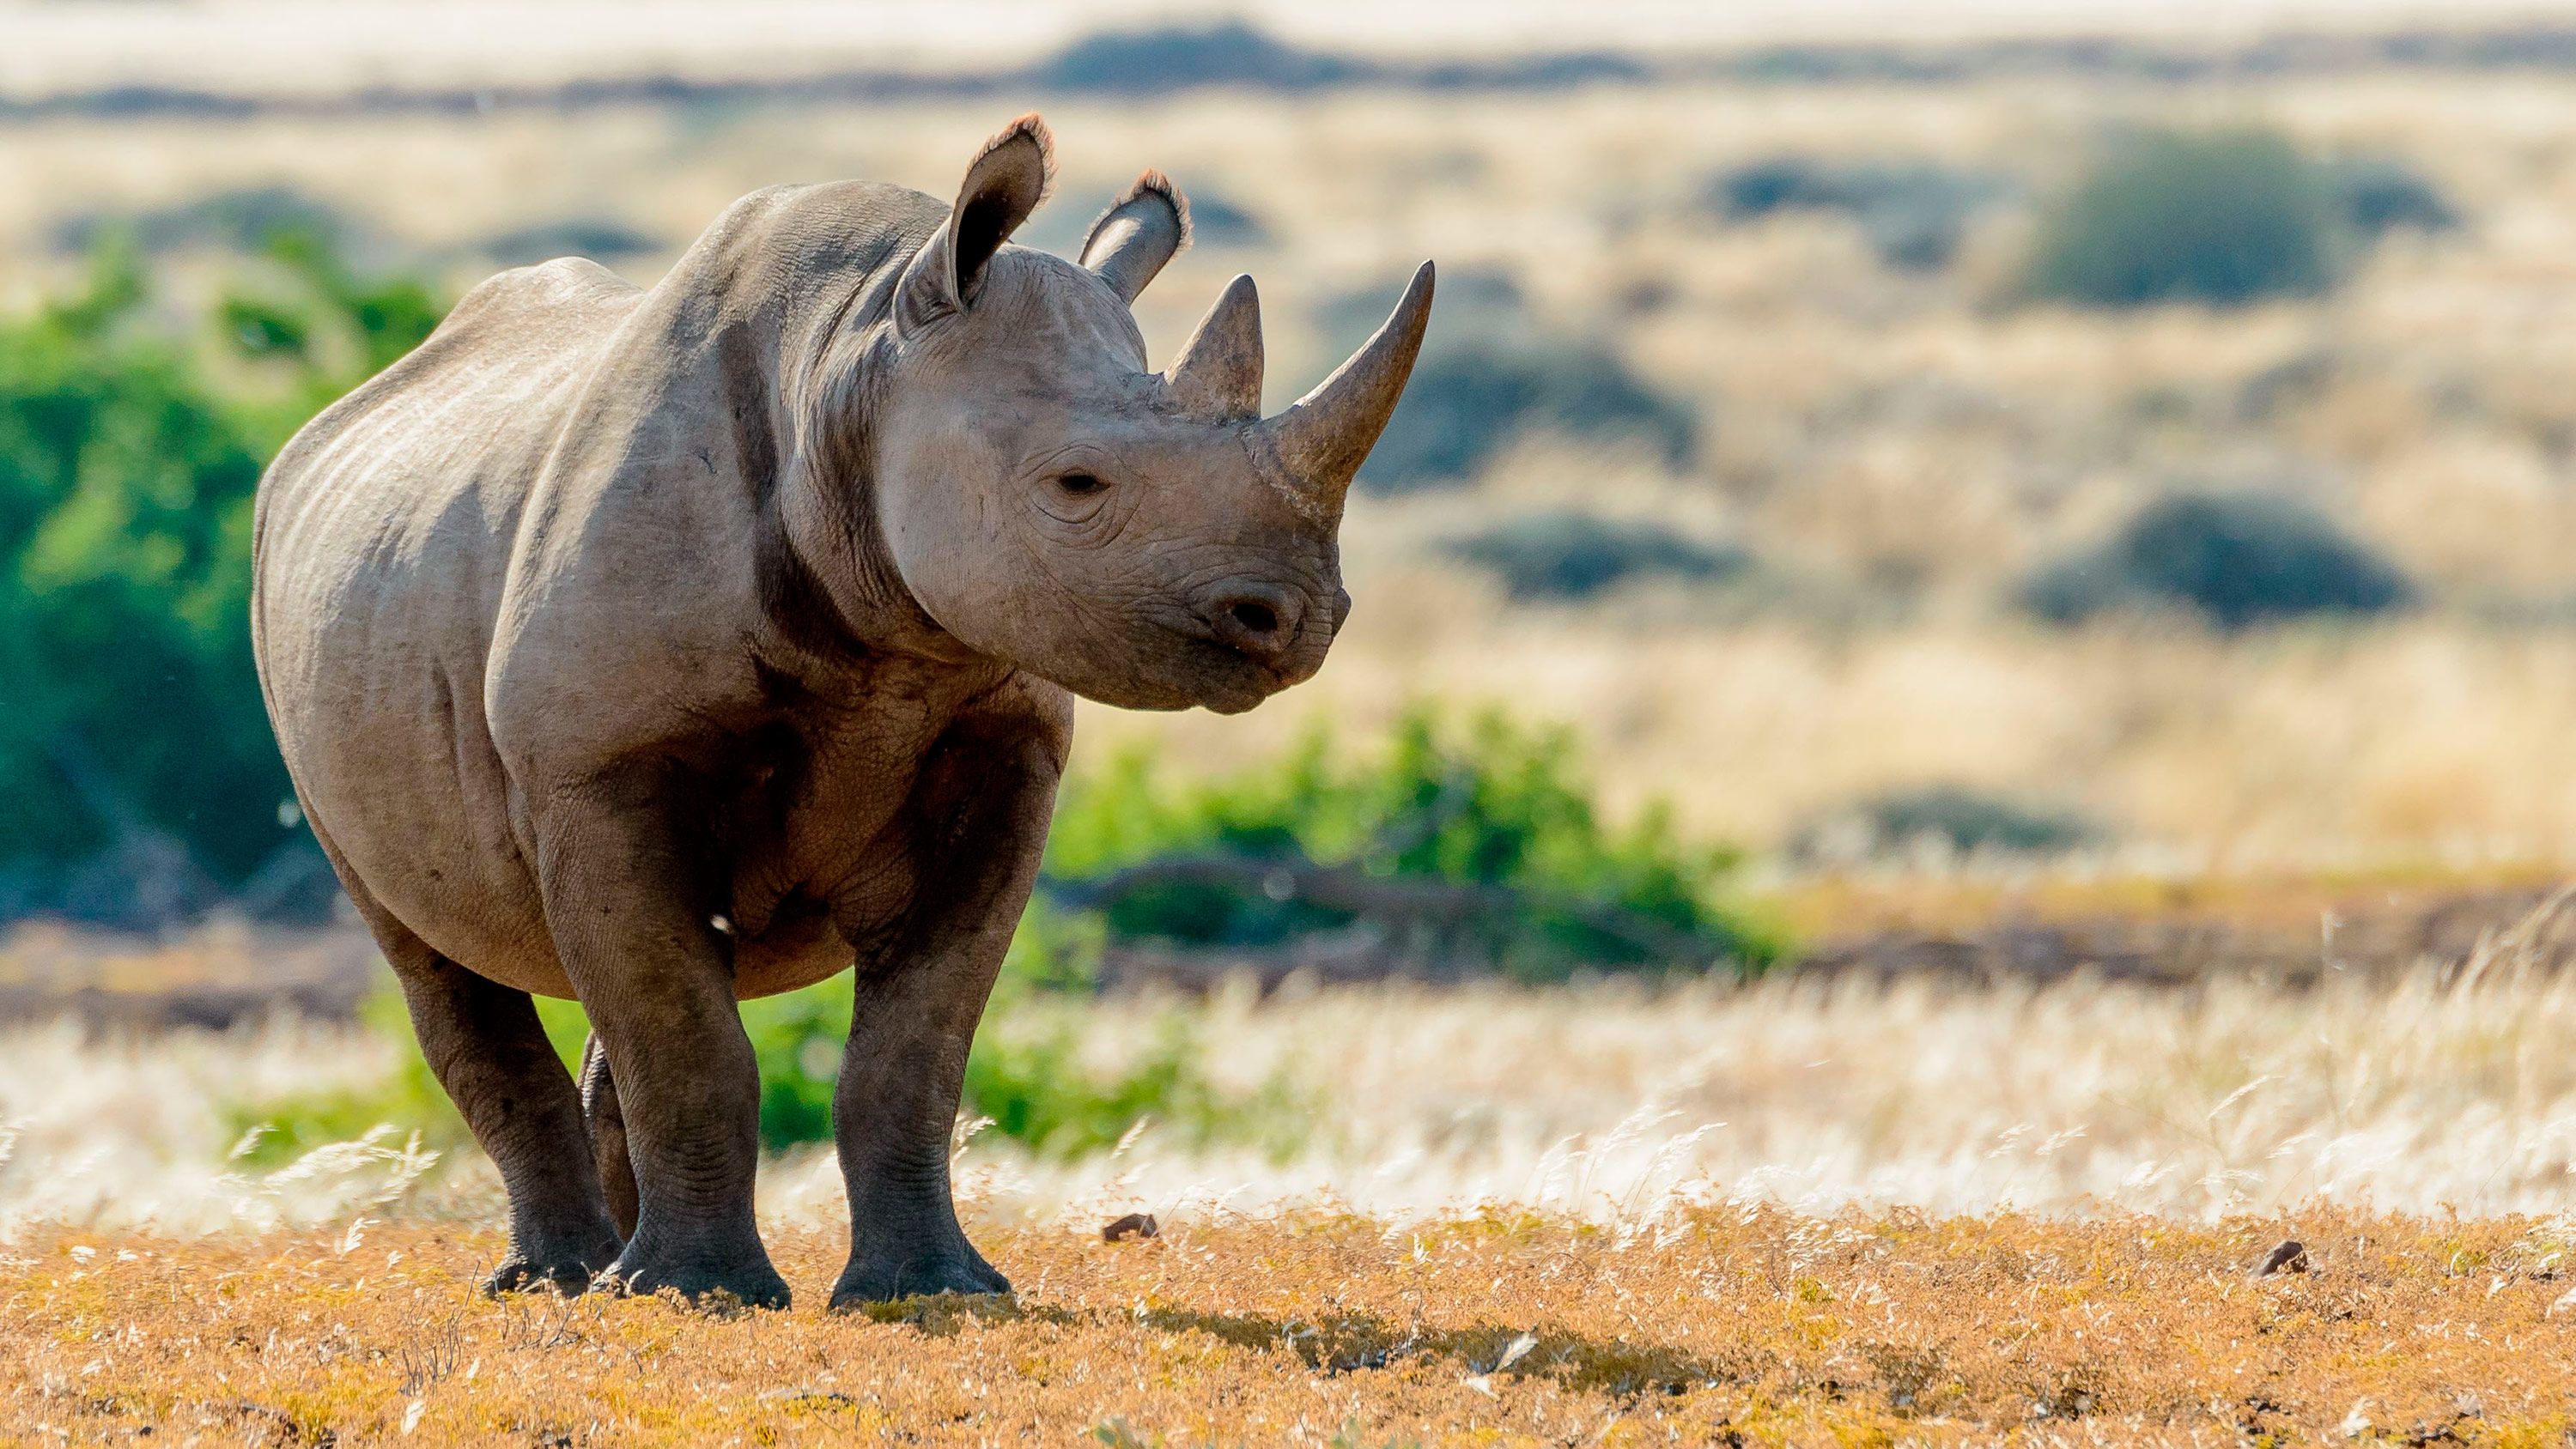 The urgent effort to save black rhinos from extinction (Opinion) | CNN